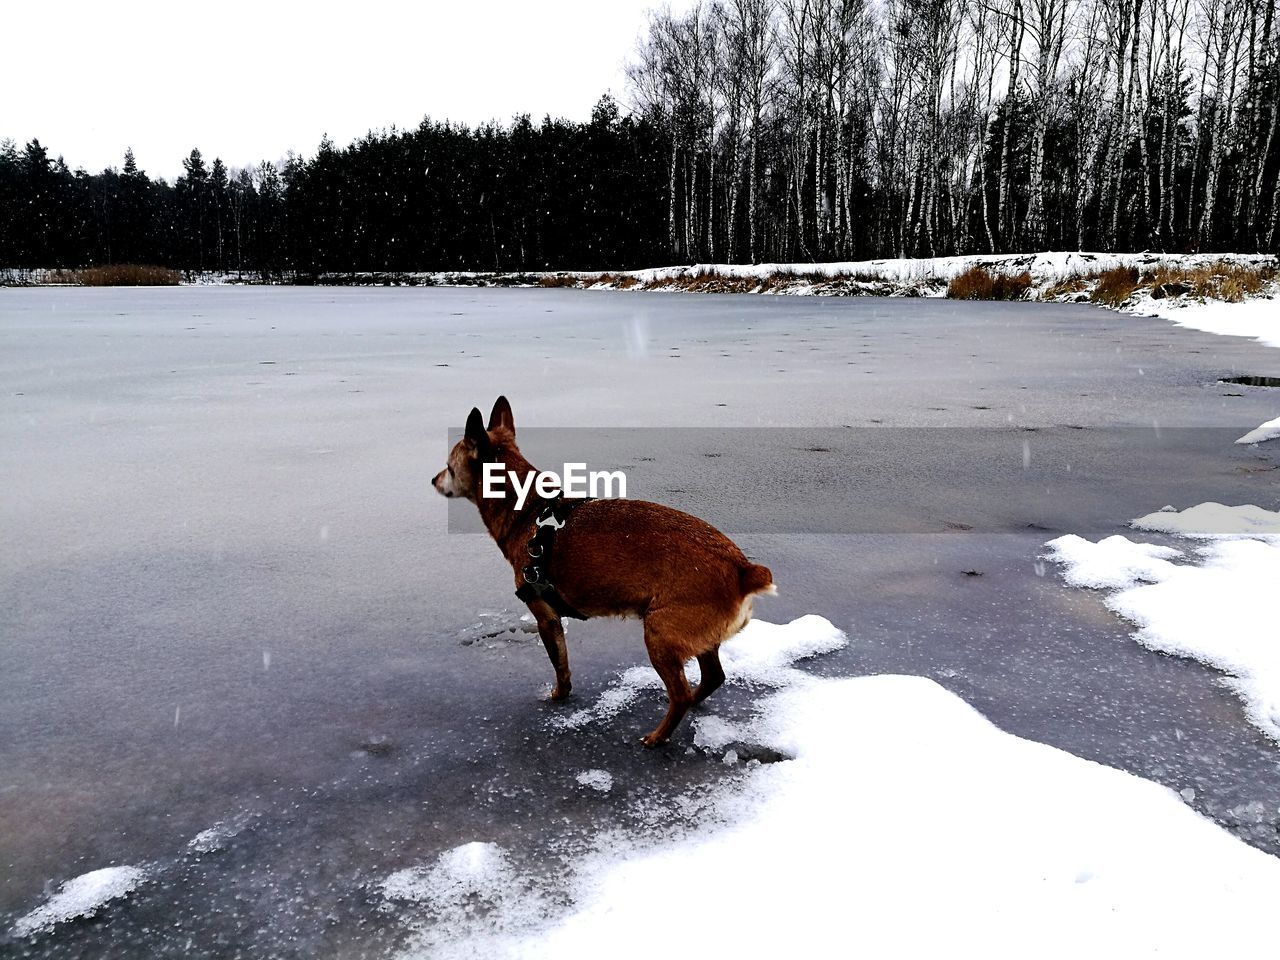 Dog on frozen lake during winter